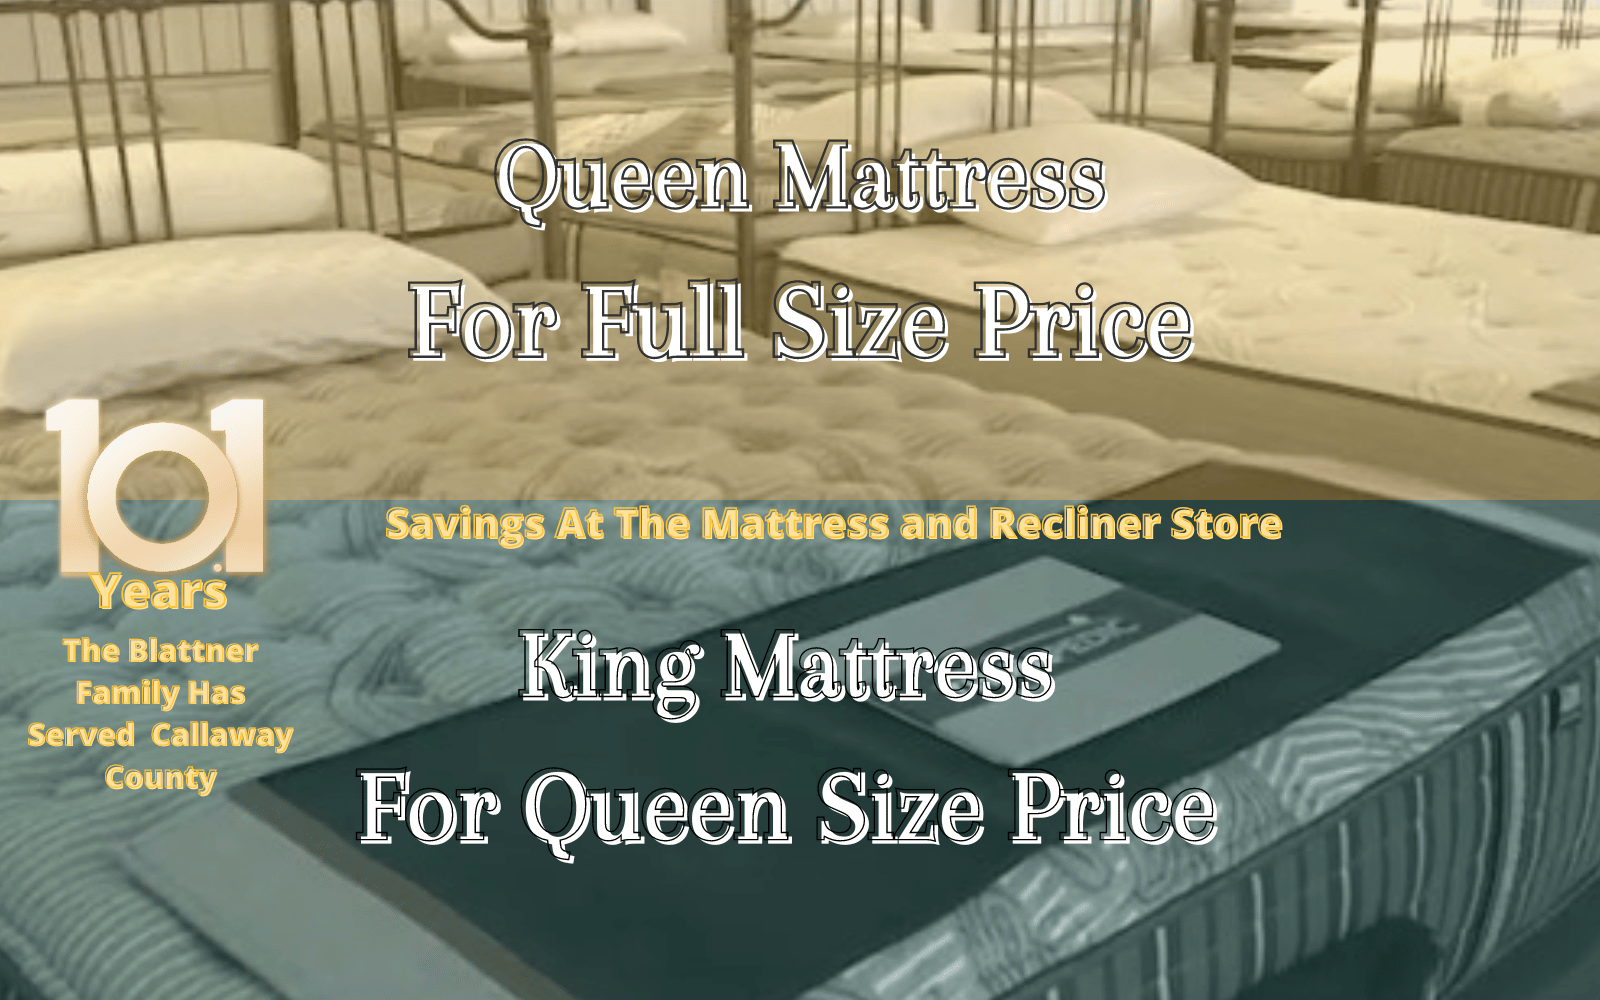 Mattress Savings at the mattress and recliner store